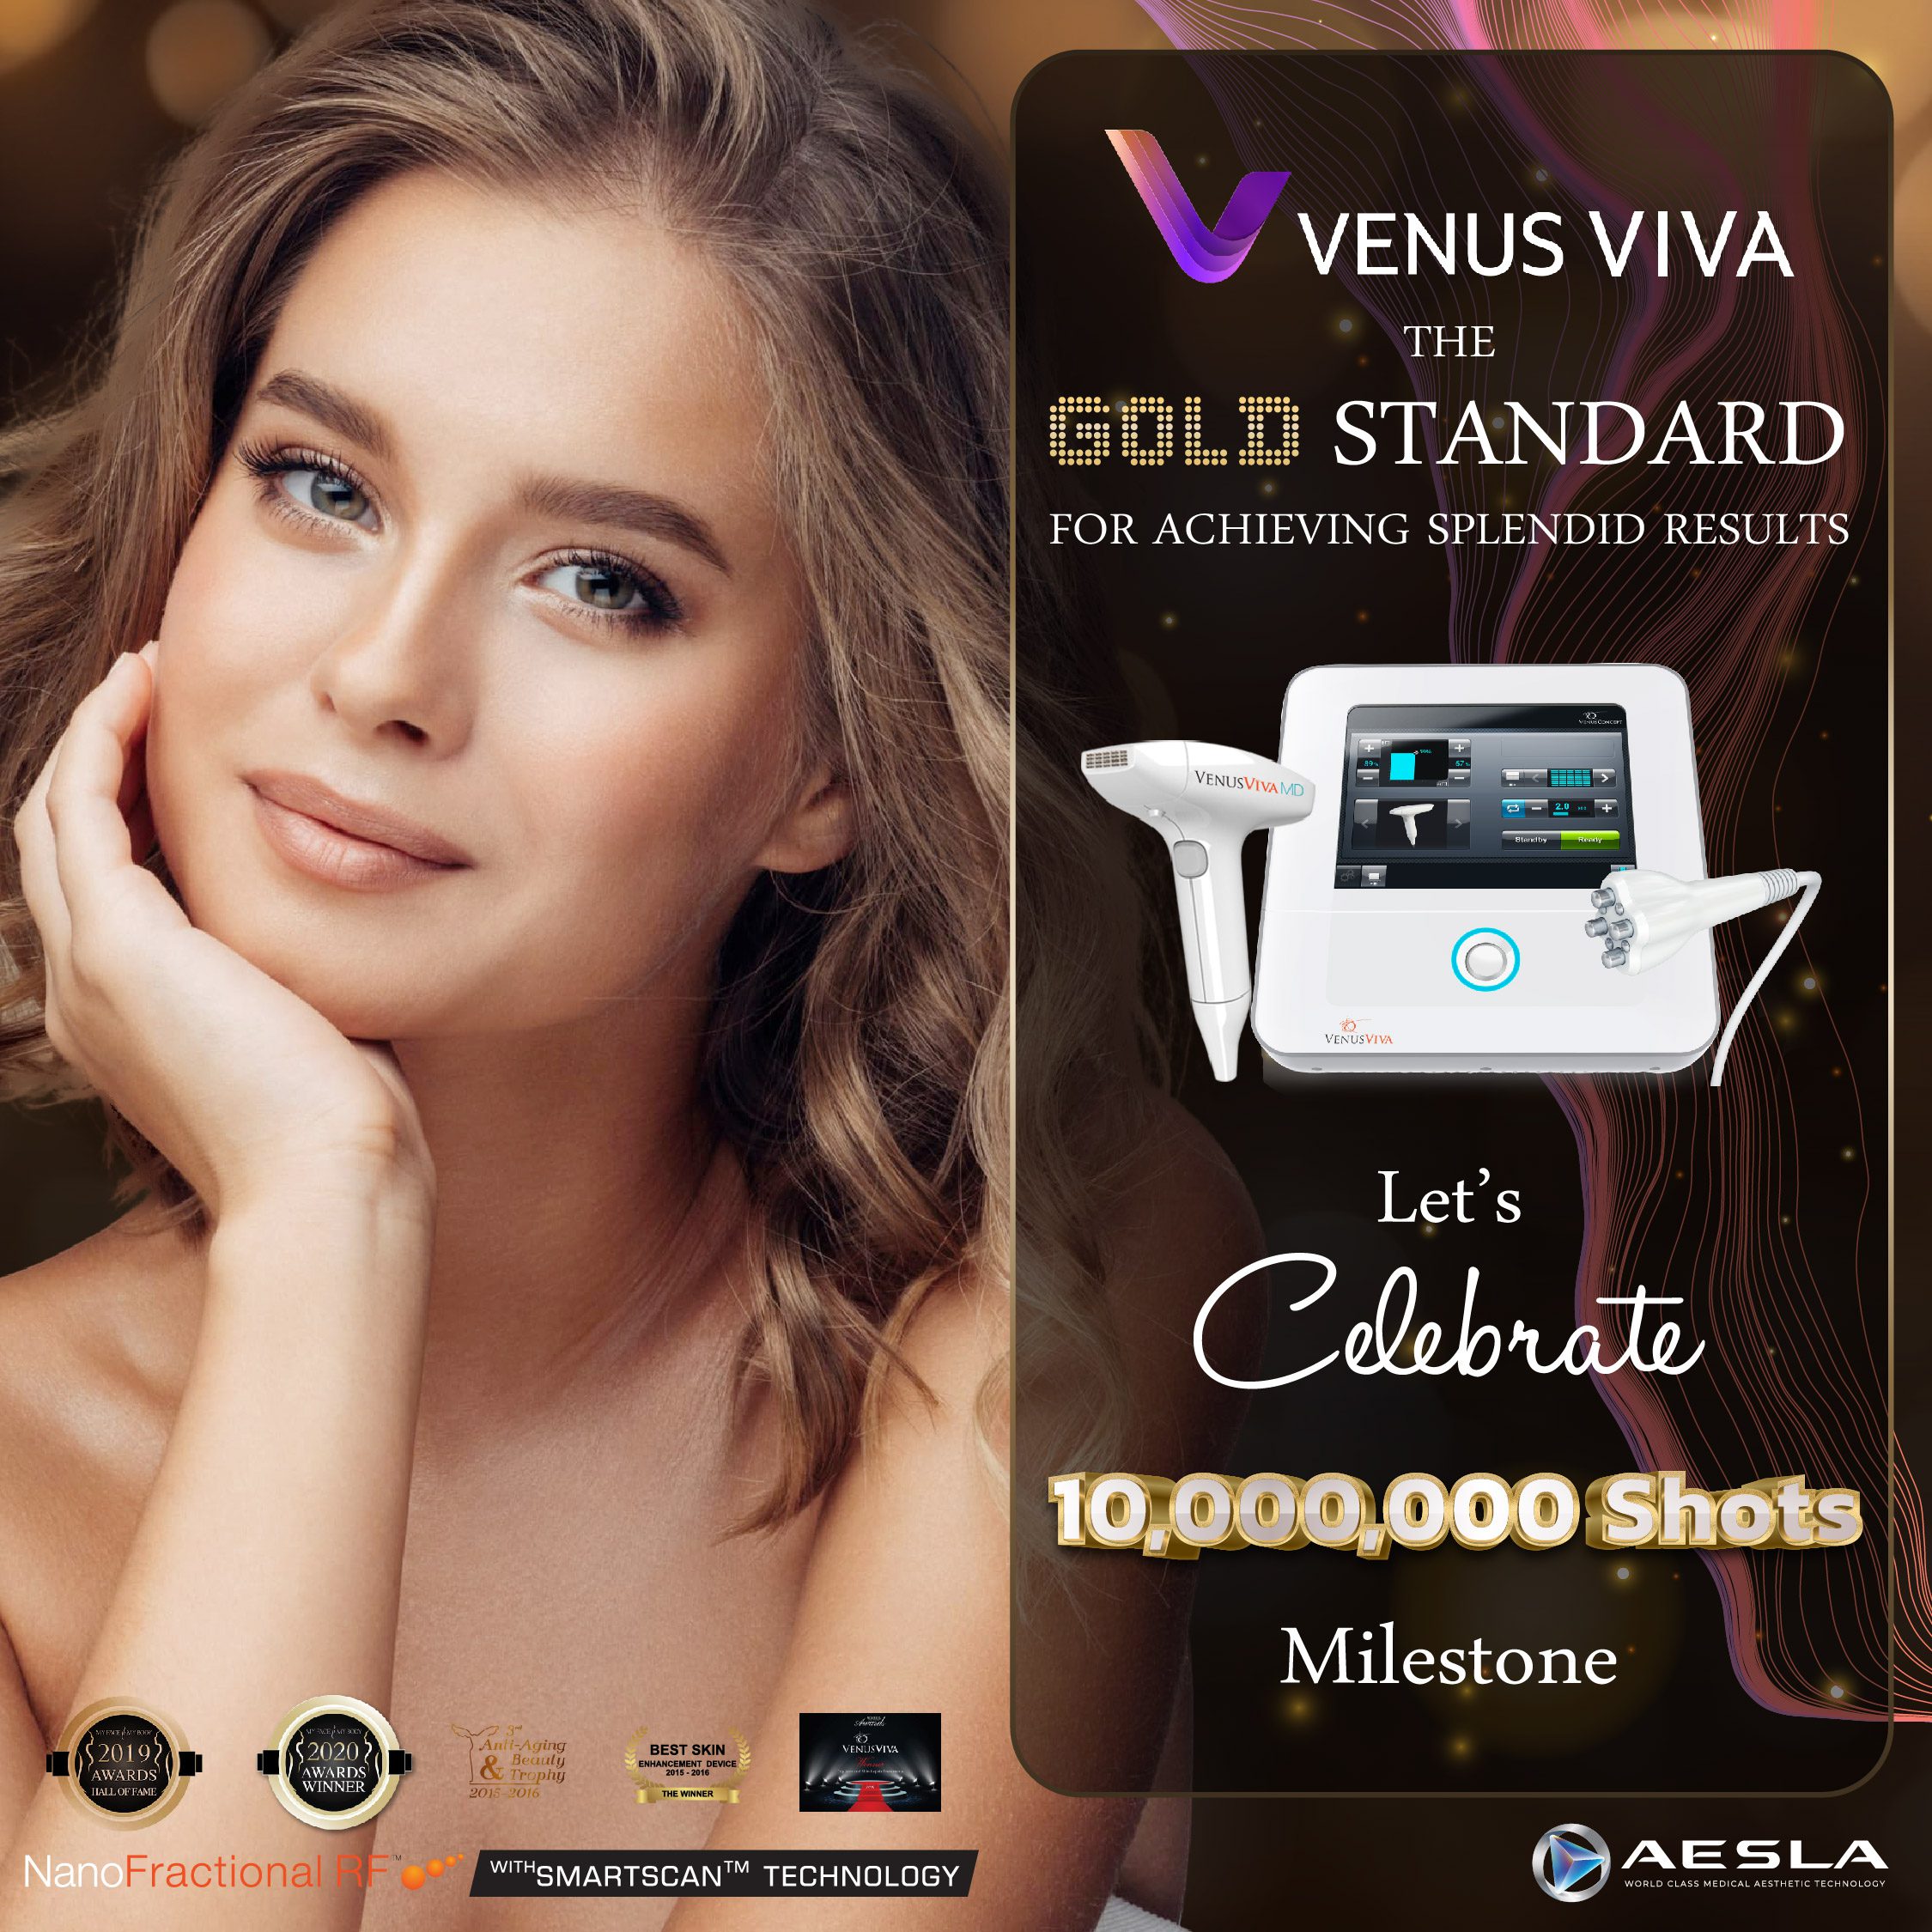 Venus Viva Celebrate 10 million shots